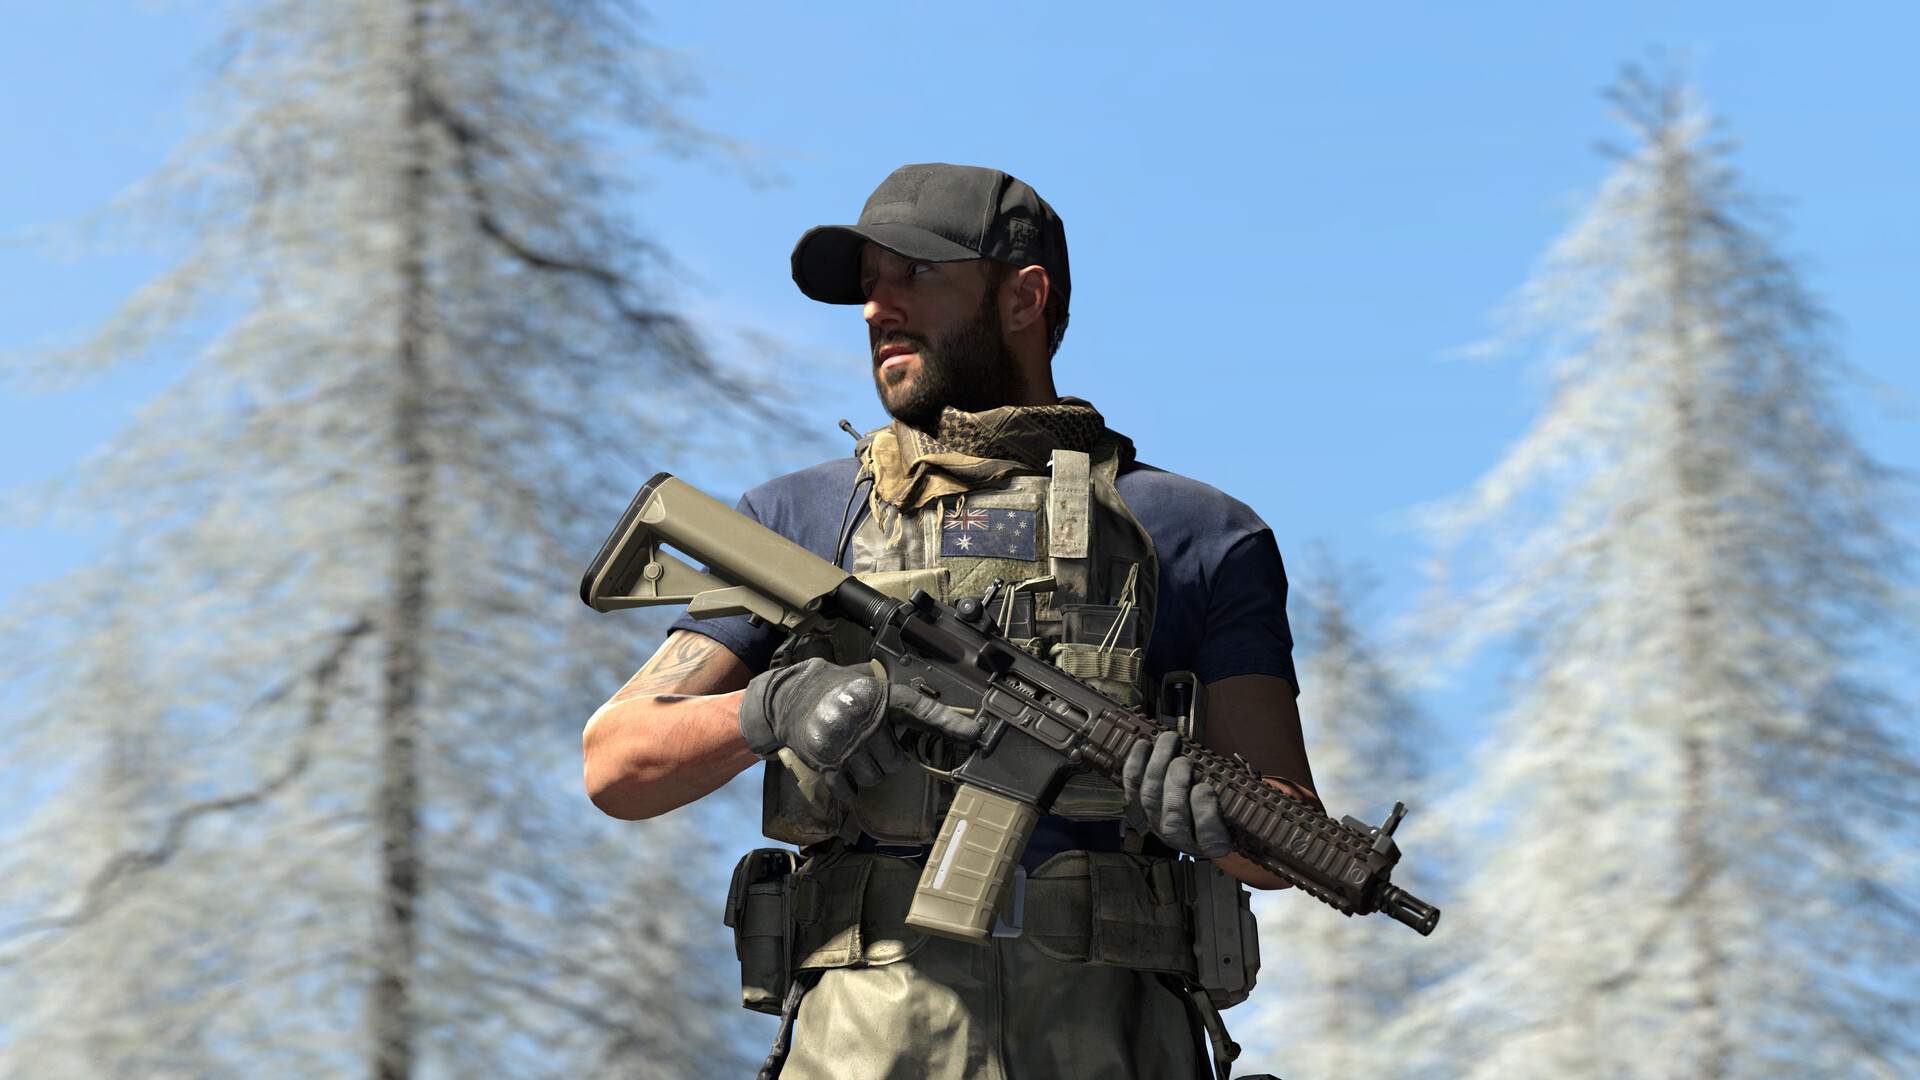 ArtStation - Call of Duty Modern Warfare 2019 Wyatt 1-2 Skins